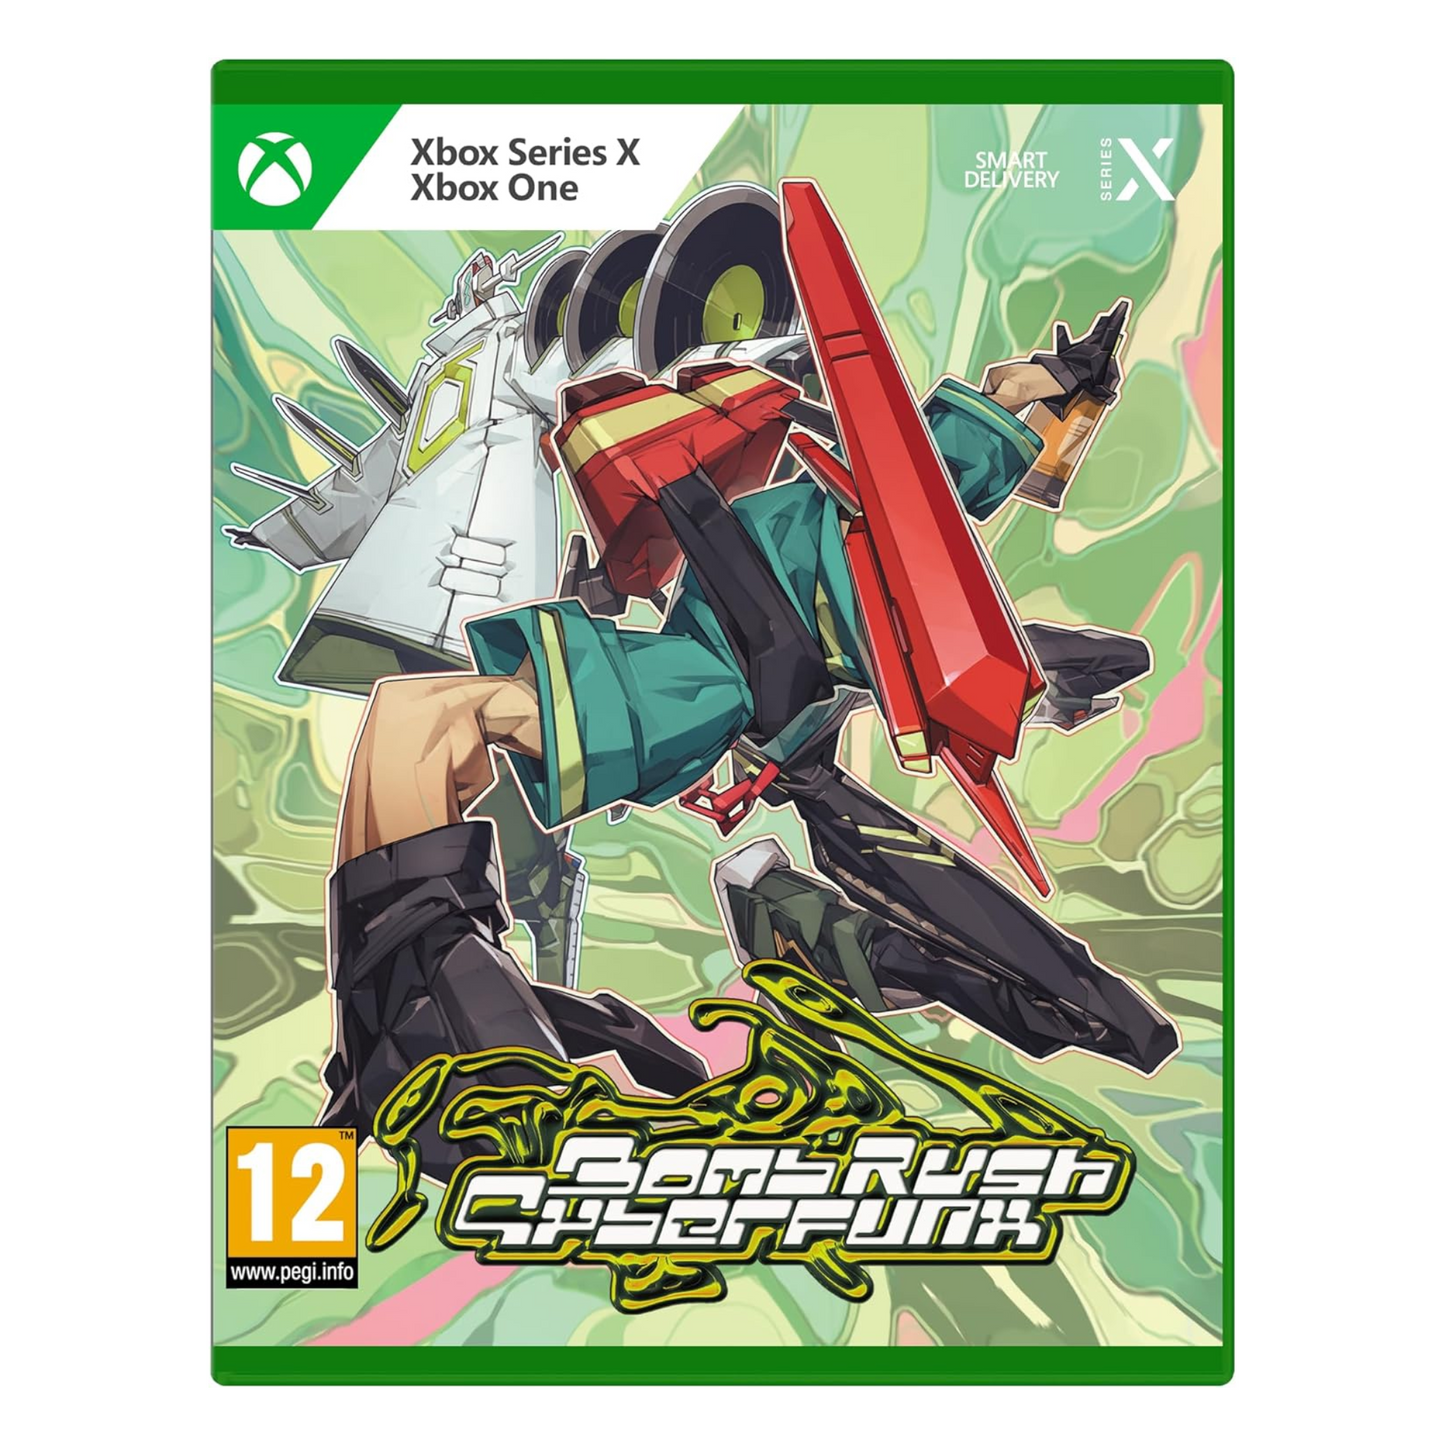 Bomb Rush Cyberfunk Video Game for XBox One /XBox Series X